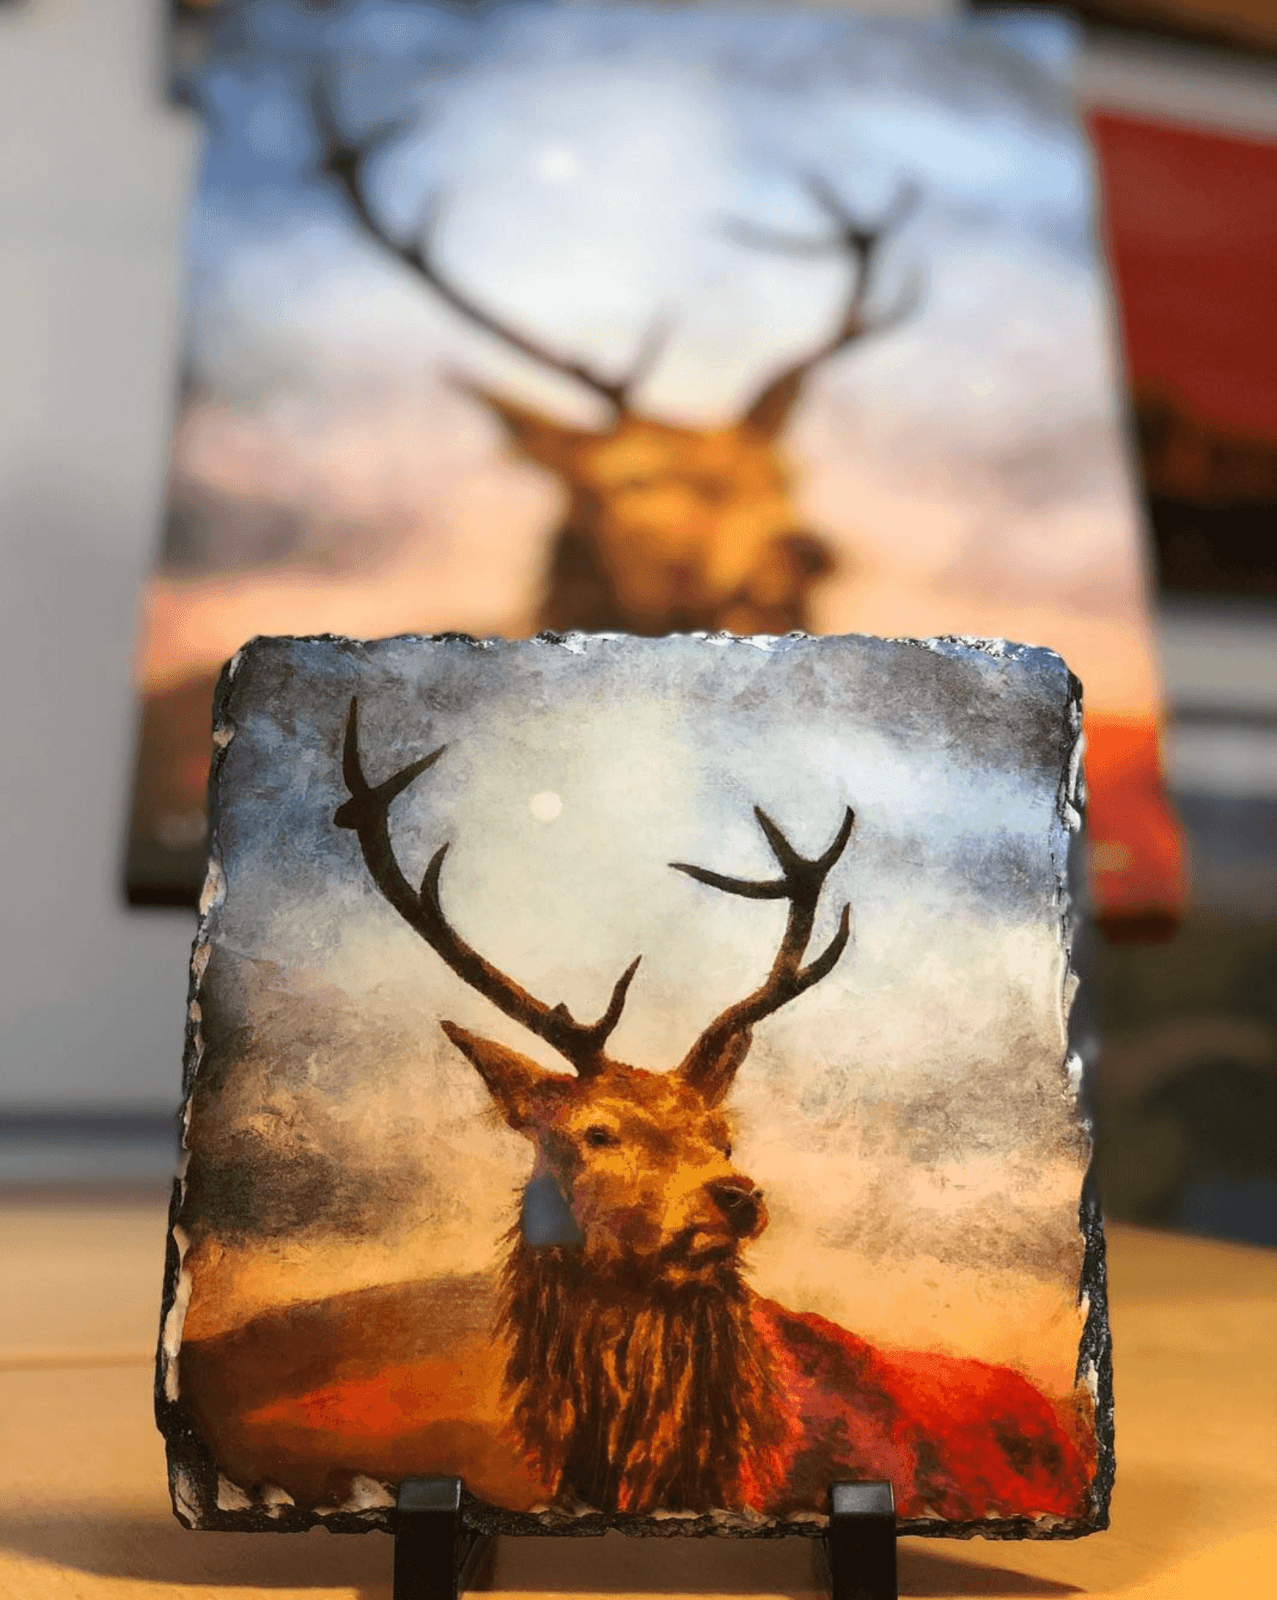 A Brooding Glencoe Scottish Slate Art-Slate Art-Glencoe Art Gallery-Paintings, Prints, Homeware, Art Gifts From Scotland By Scottish Artist Kevin Hunter